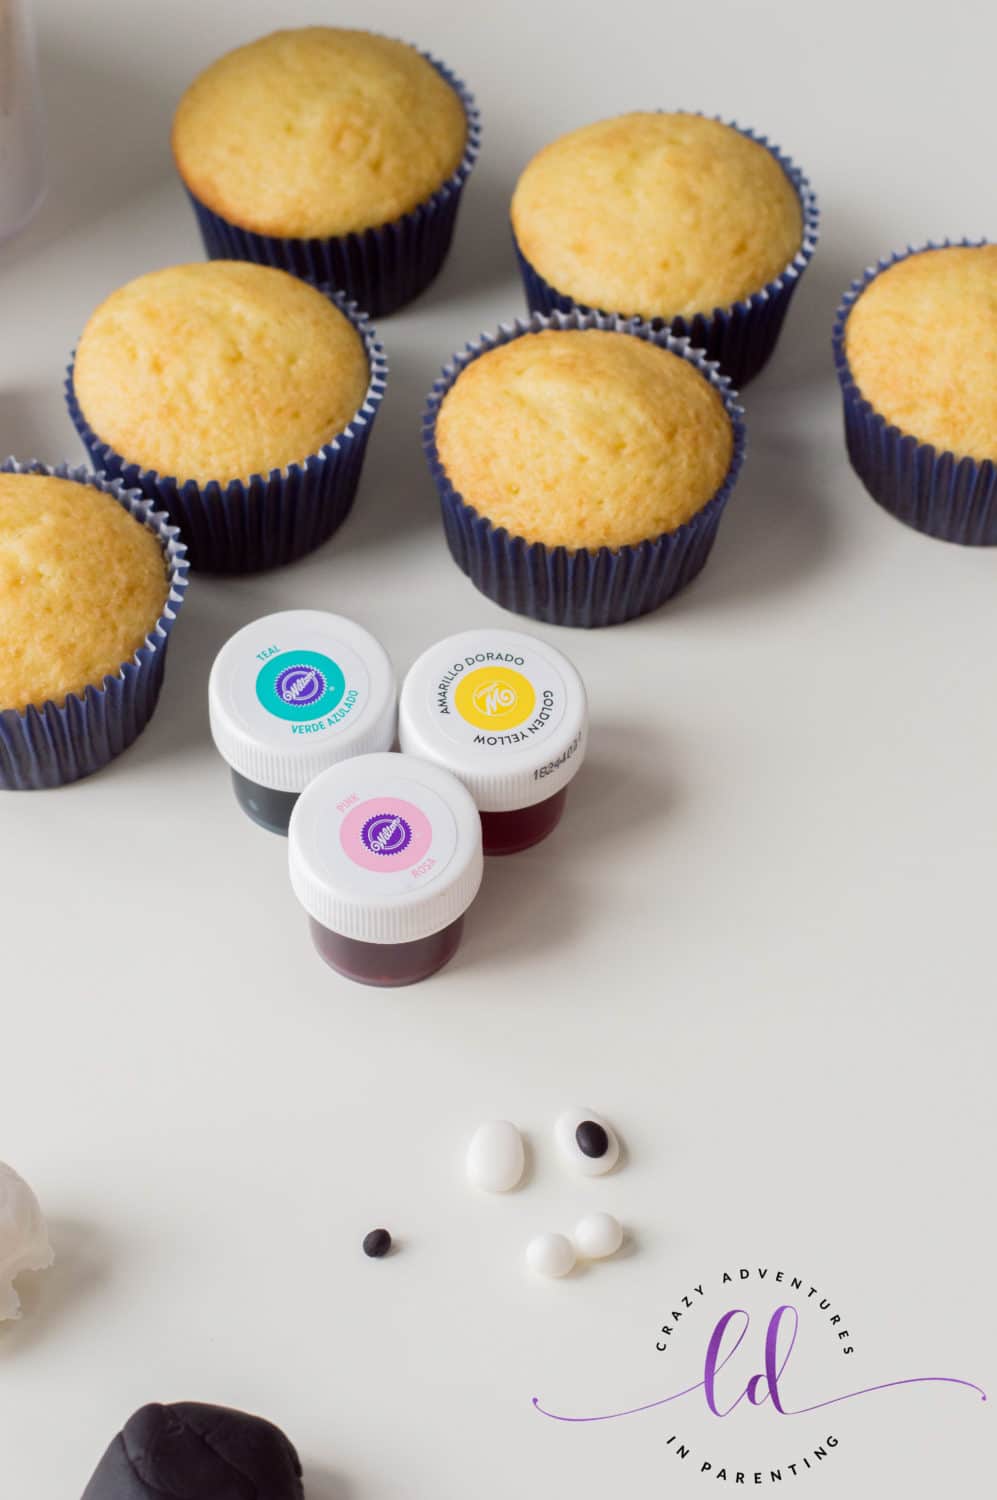 Add black fondant to make eyeballs for Tie-Dye Poop Emoji Cupcakes